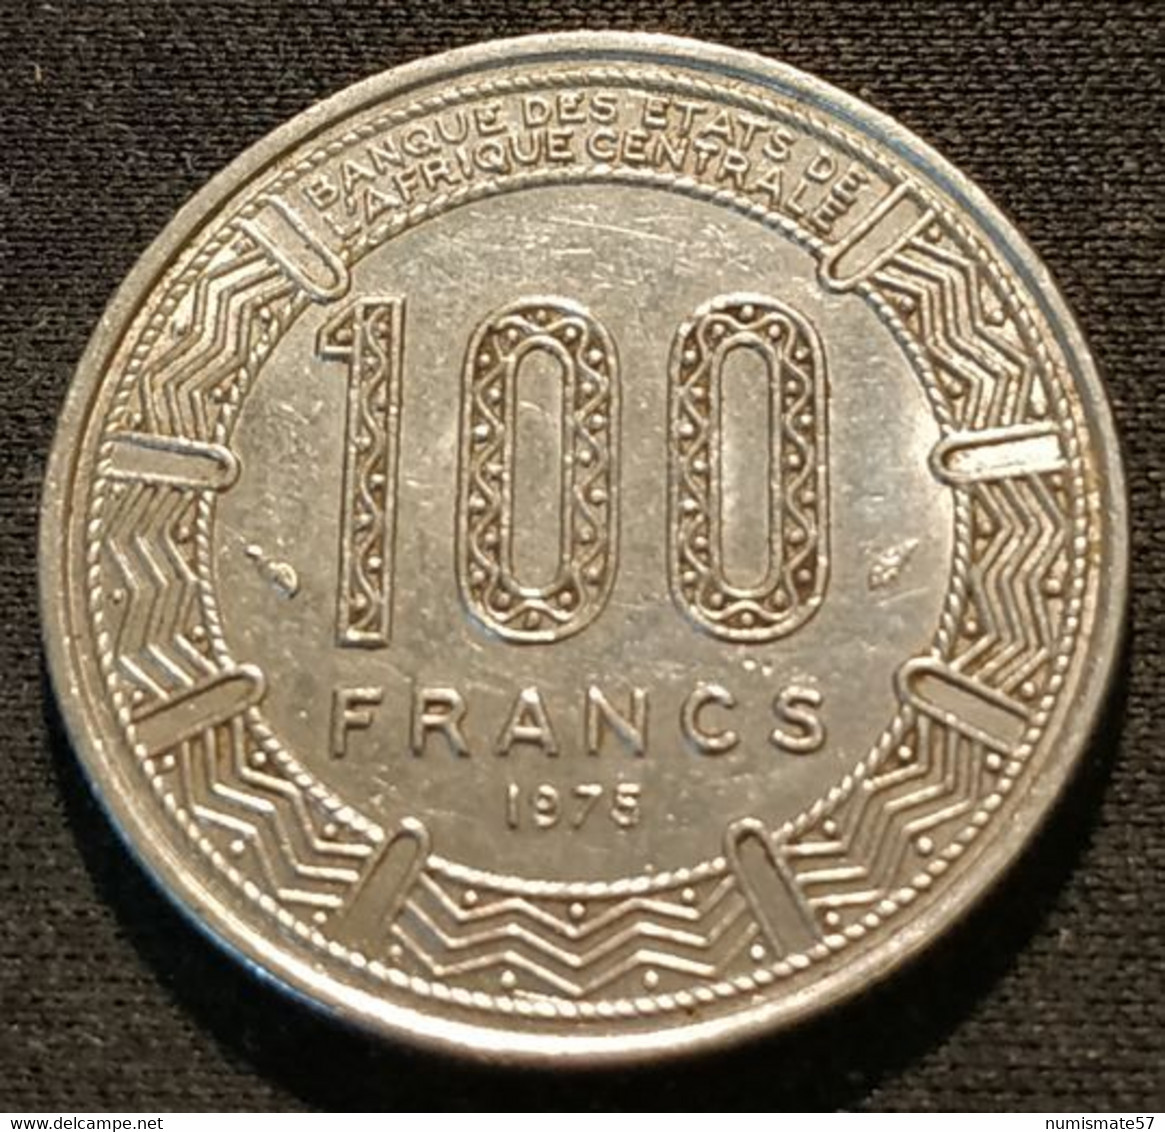 CONGO - 100 FRANCS 1975 - KM 2 - Congo (Republic 1960)